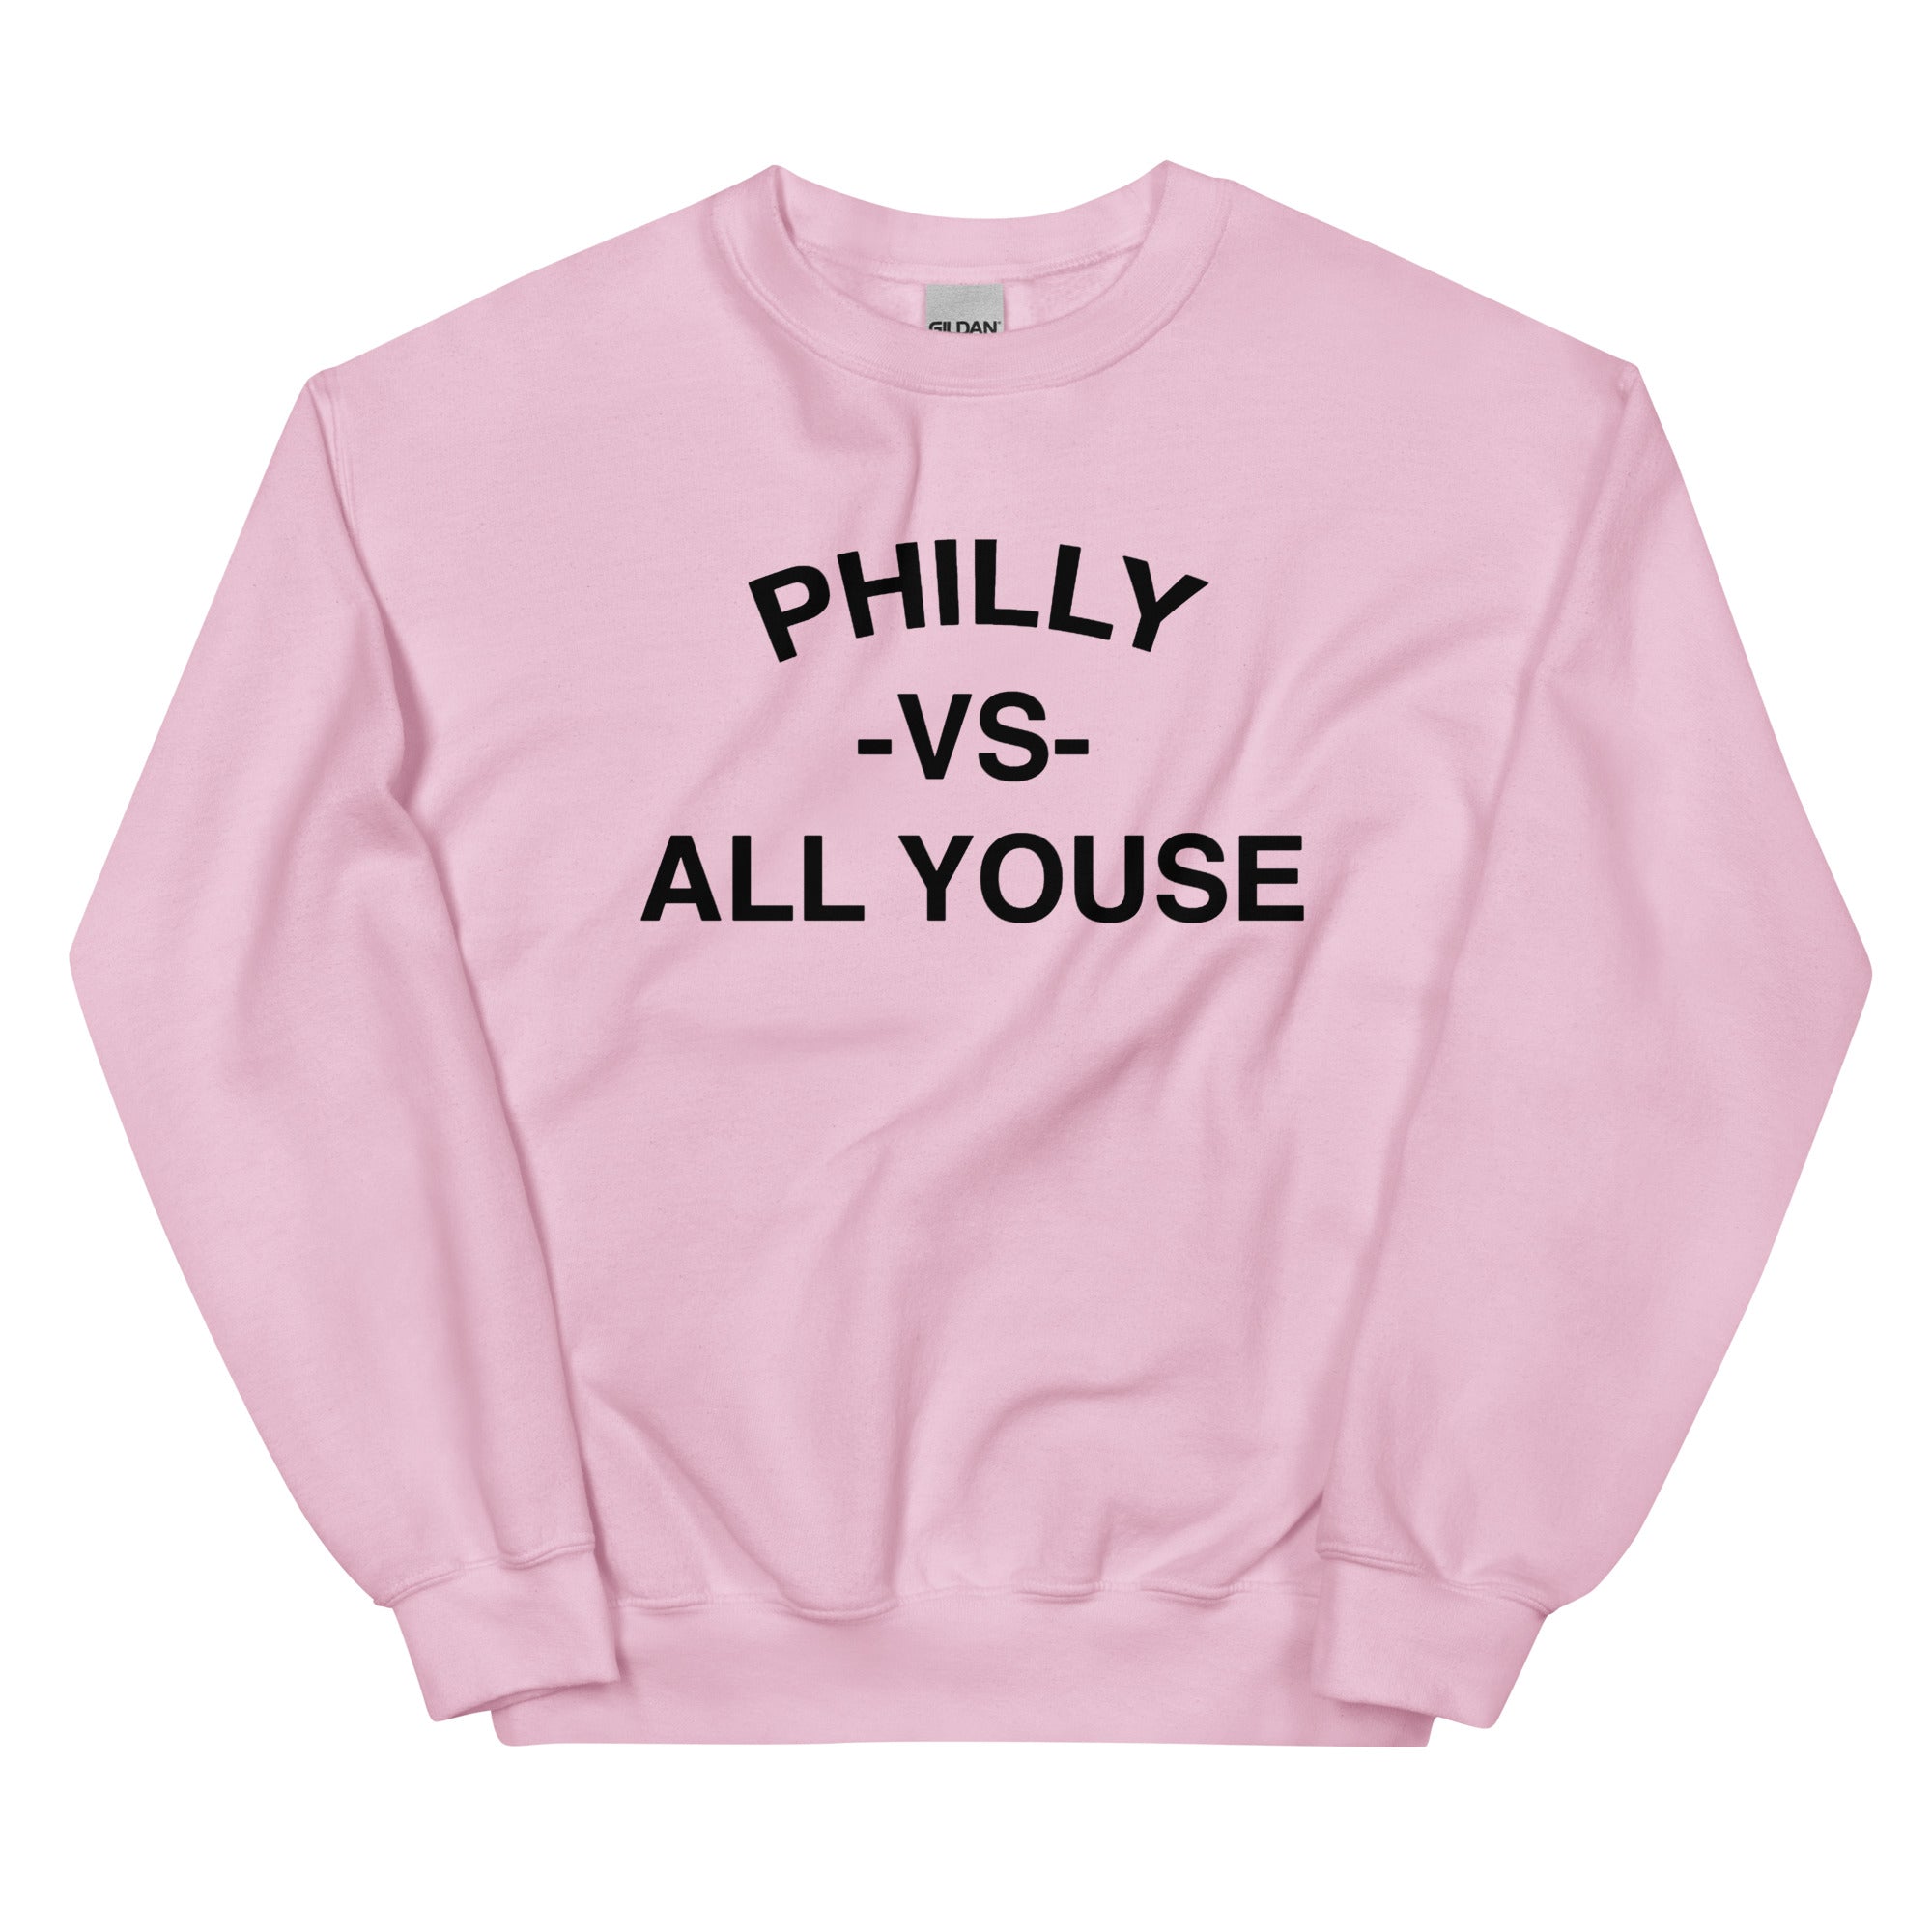 Philadelphia vs everybody philly vs all youse pink sweatshirt Phillygoat